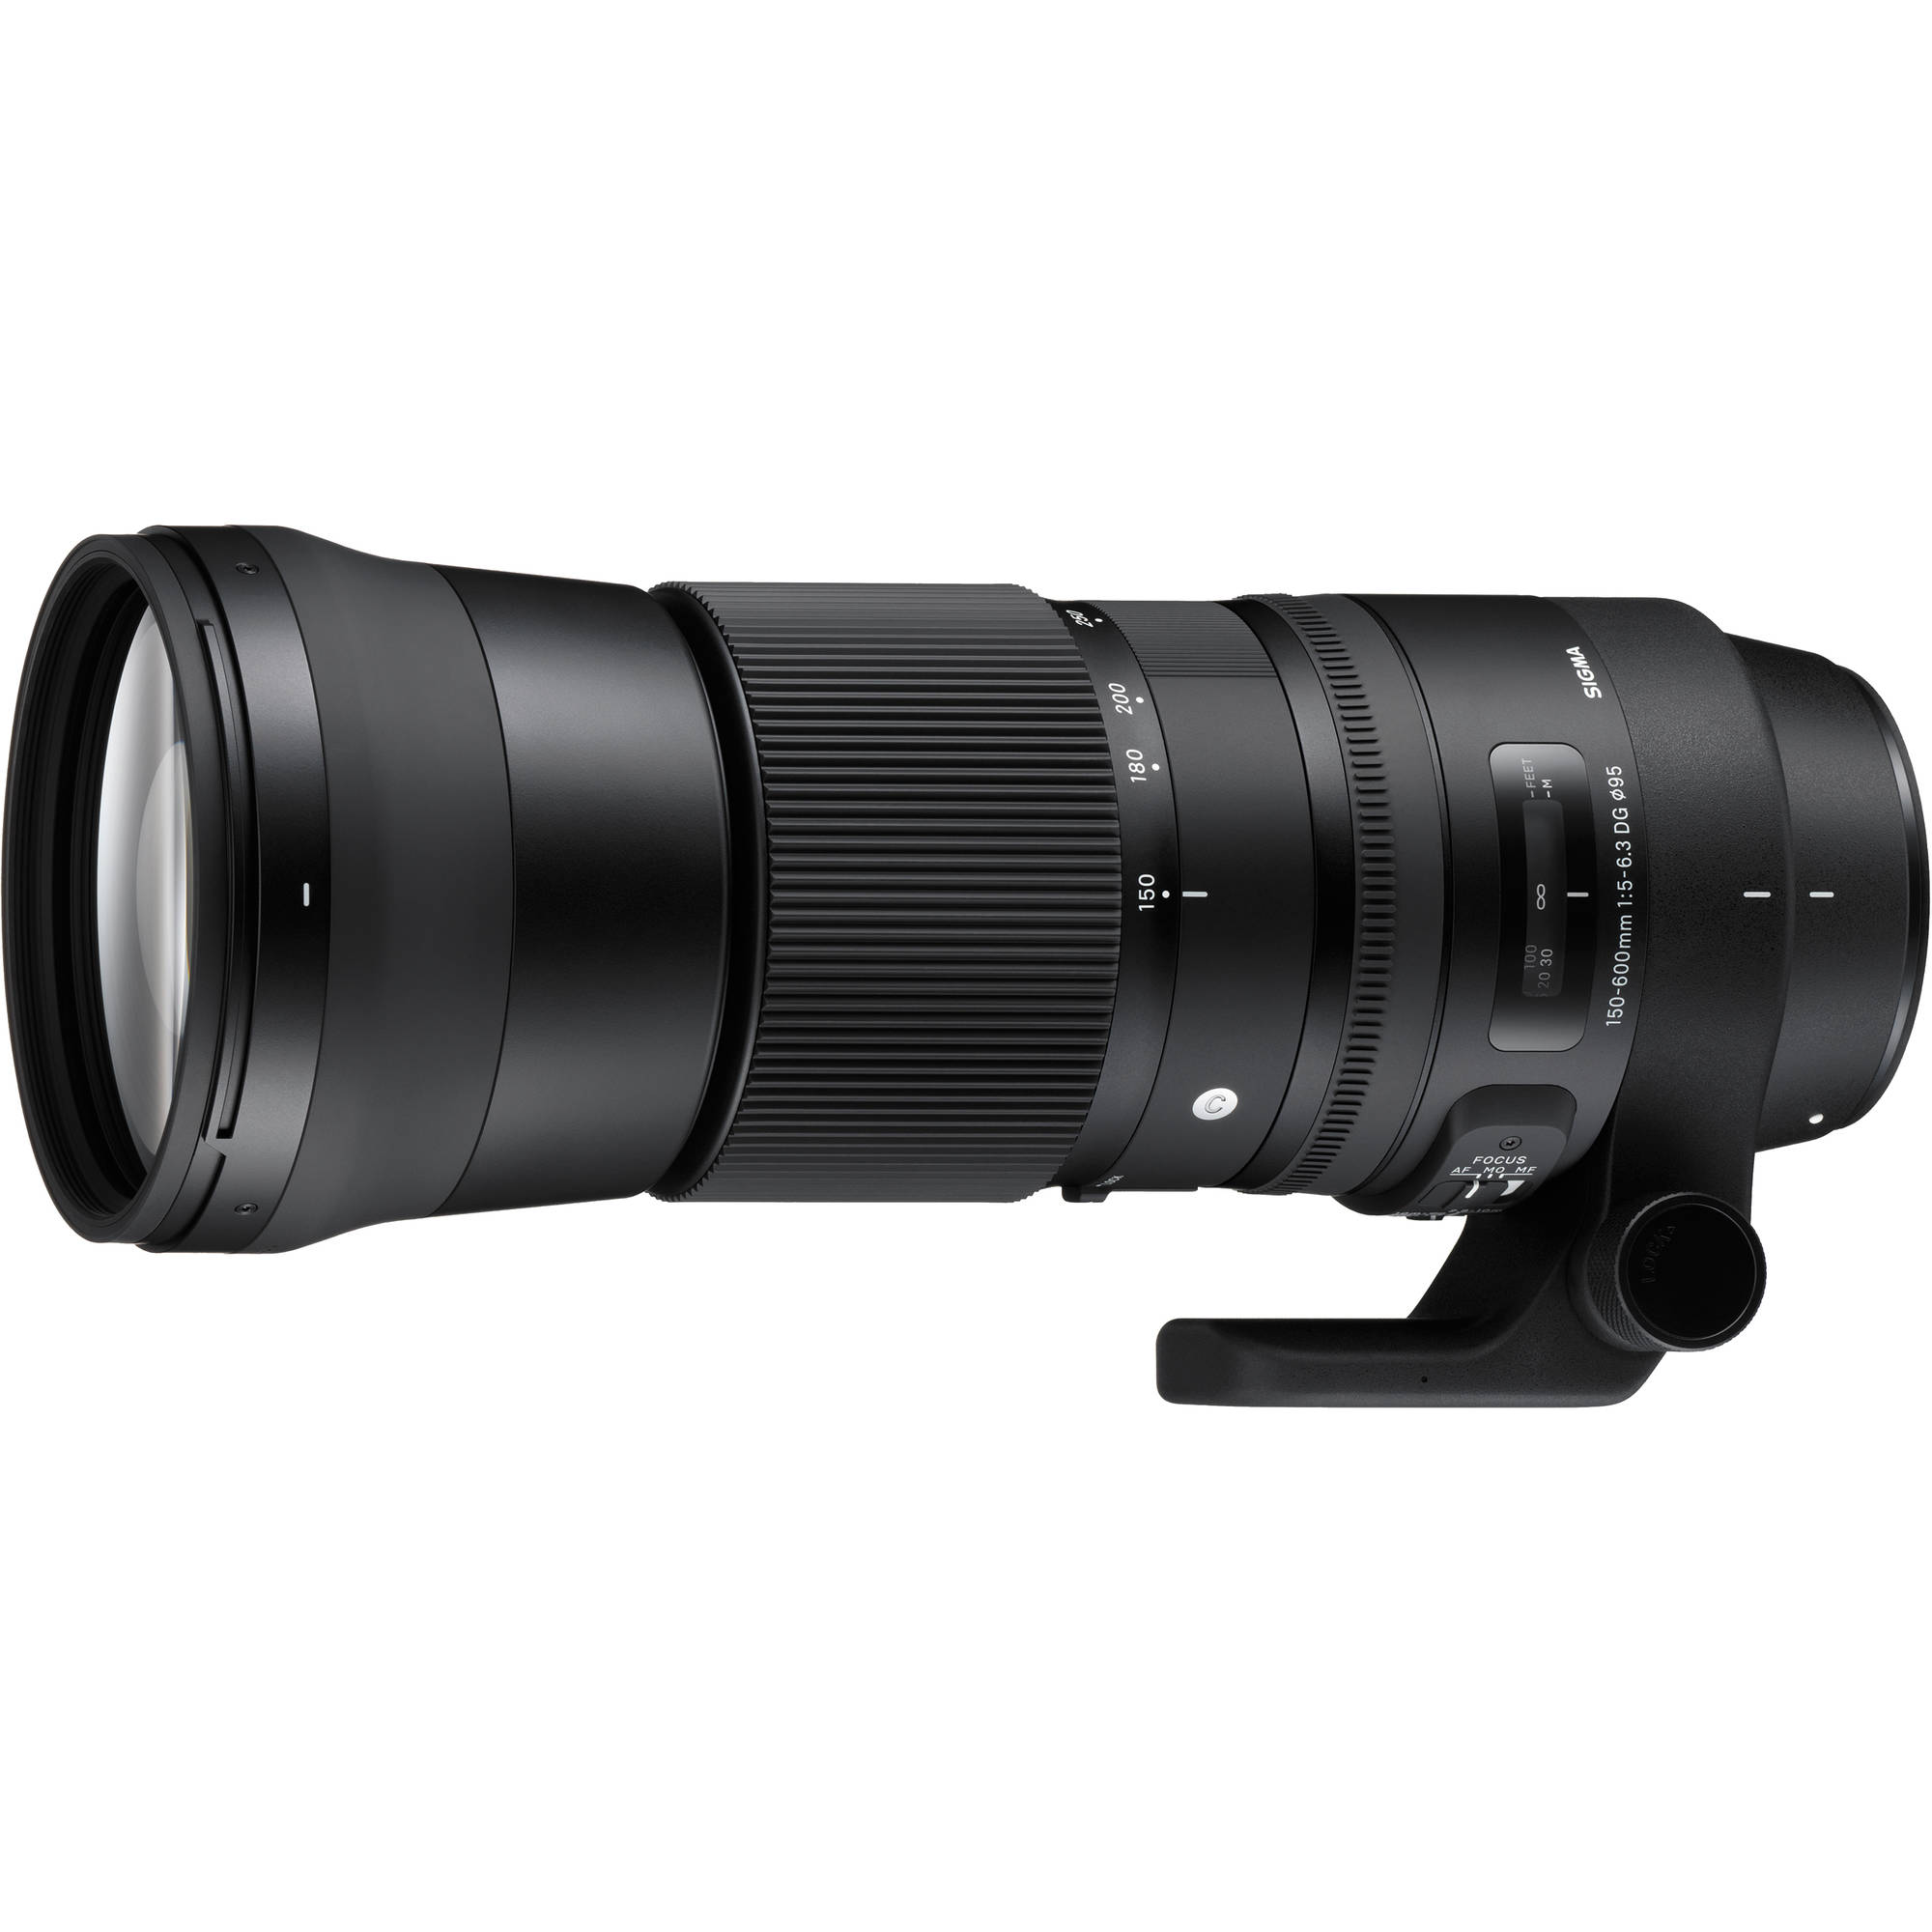 Sigma 150-600mm f/5-6.3 DG OS HSM Lente contemporánea para Nikon F